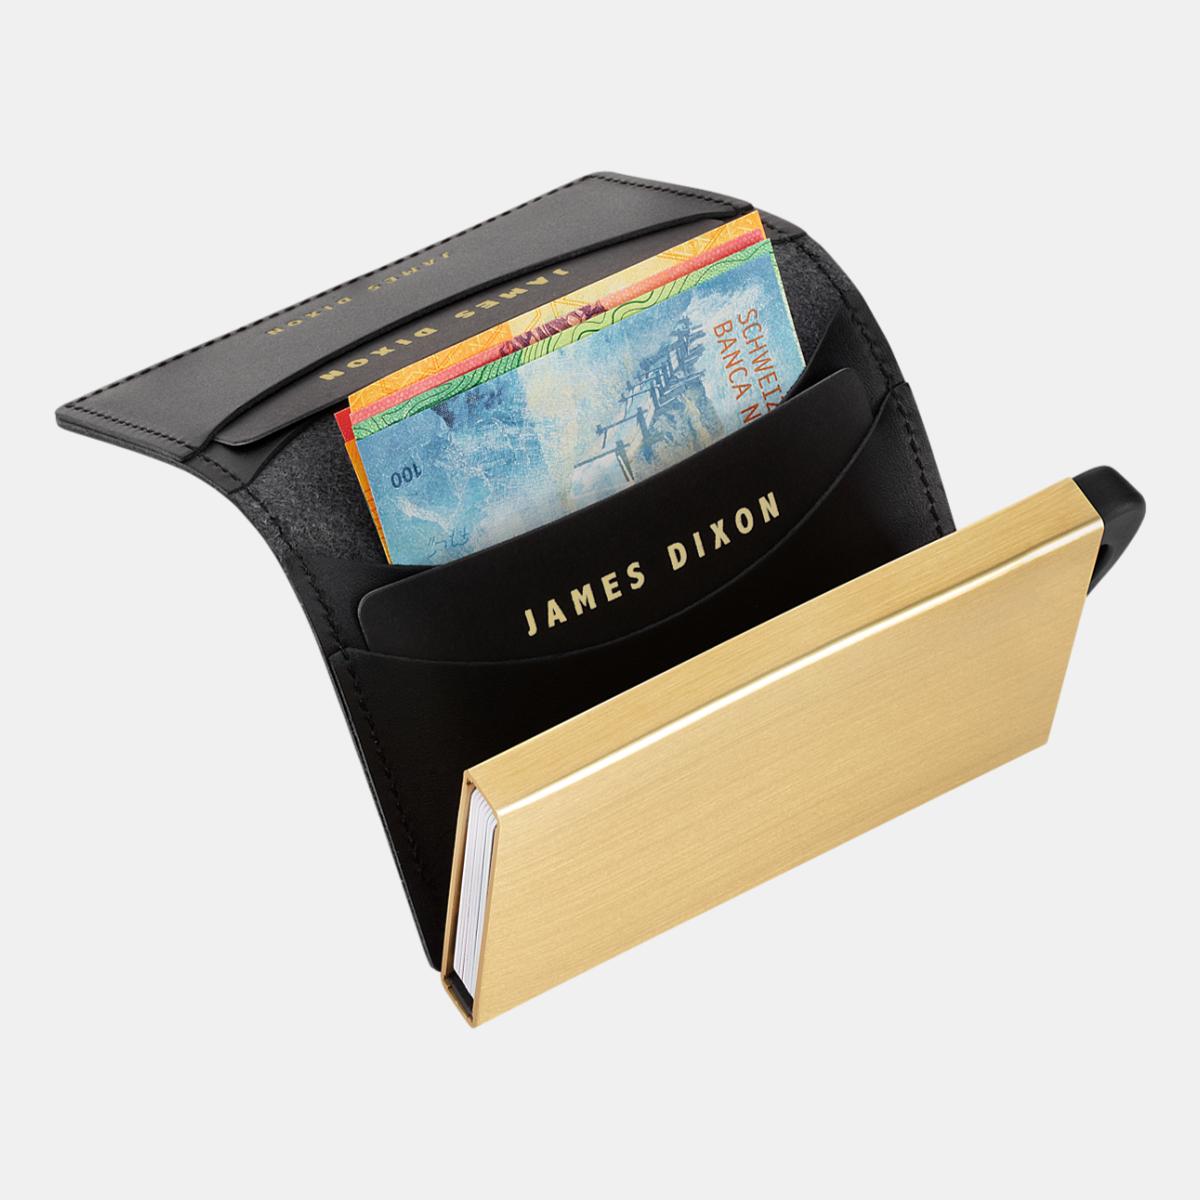 jd0022 james dixon puro one black gold wallet notes